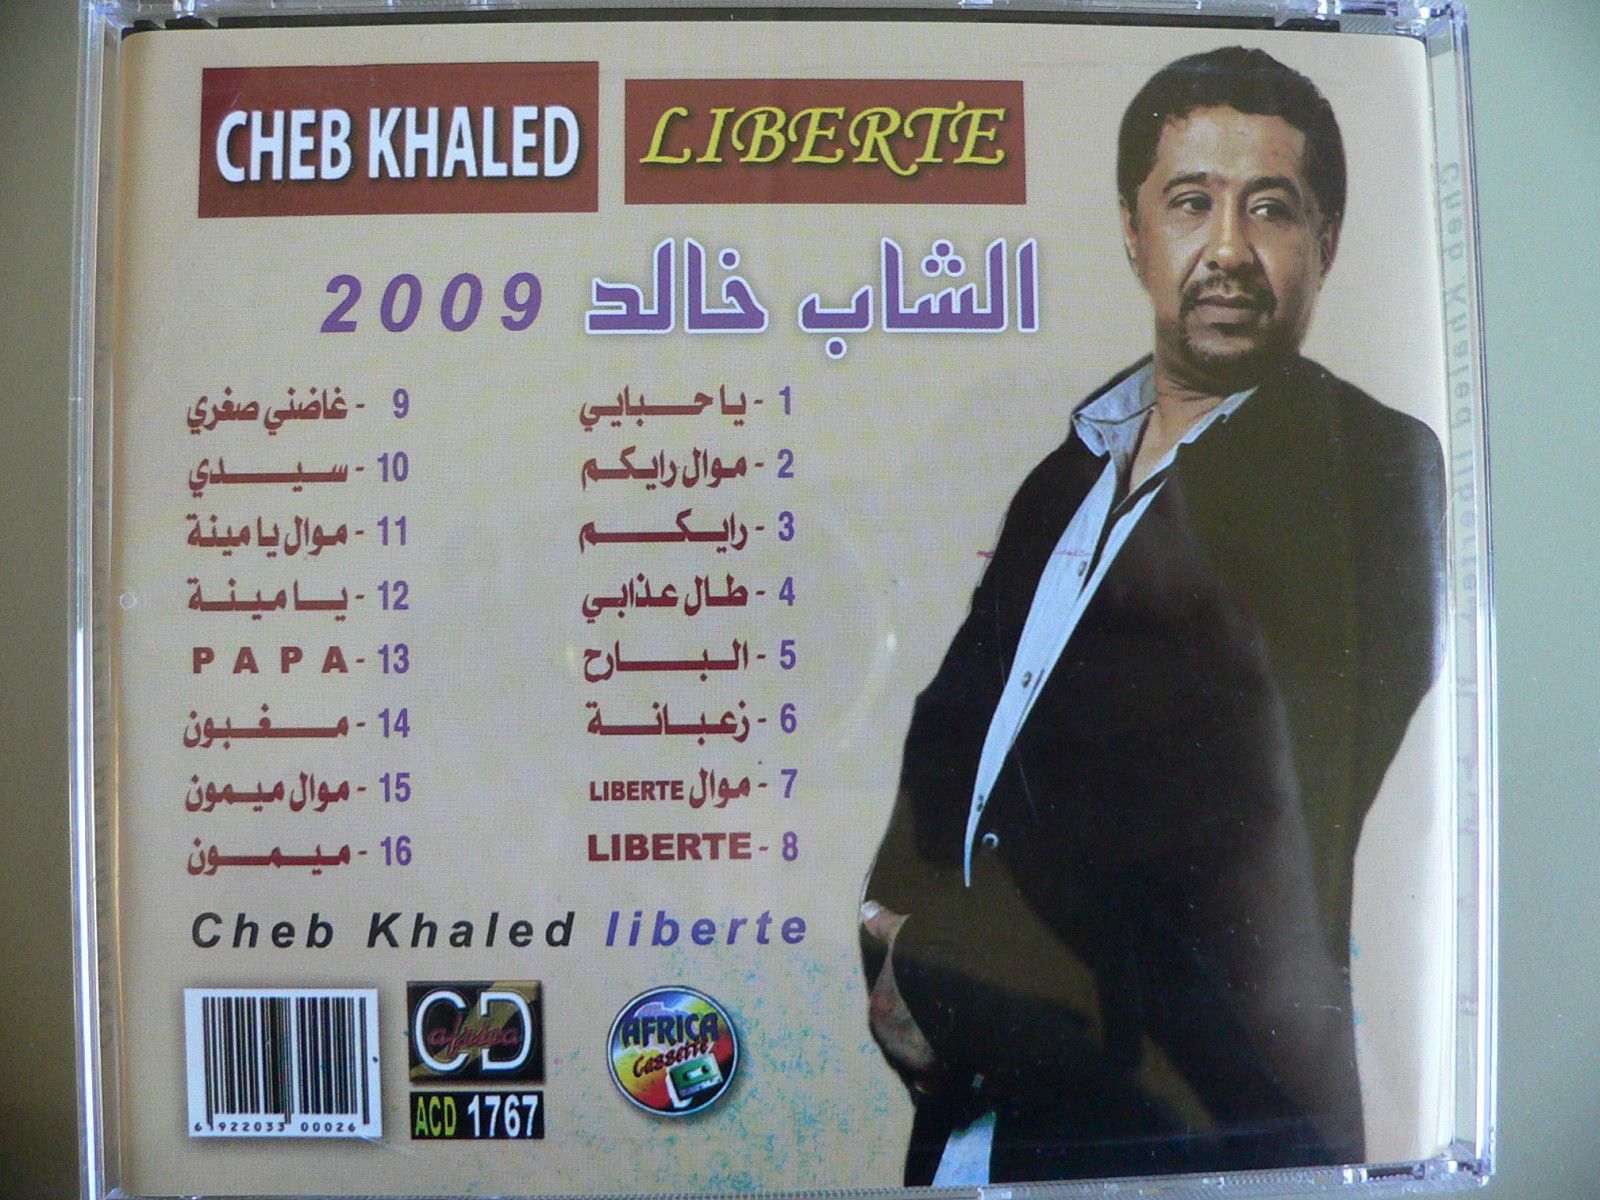 cheb khaled liberte 2009